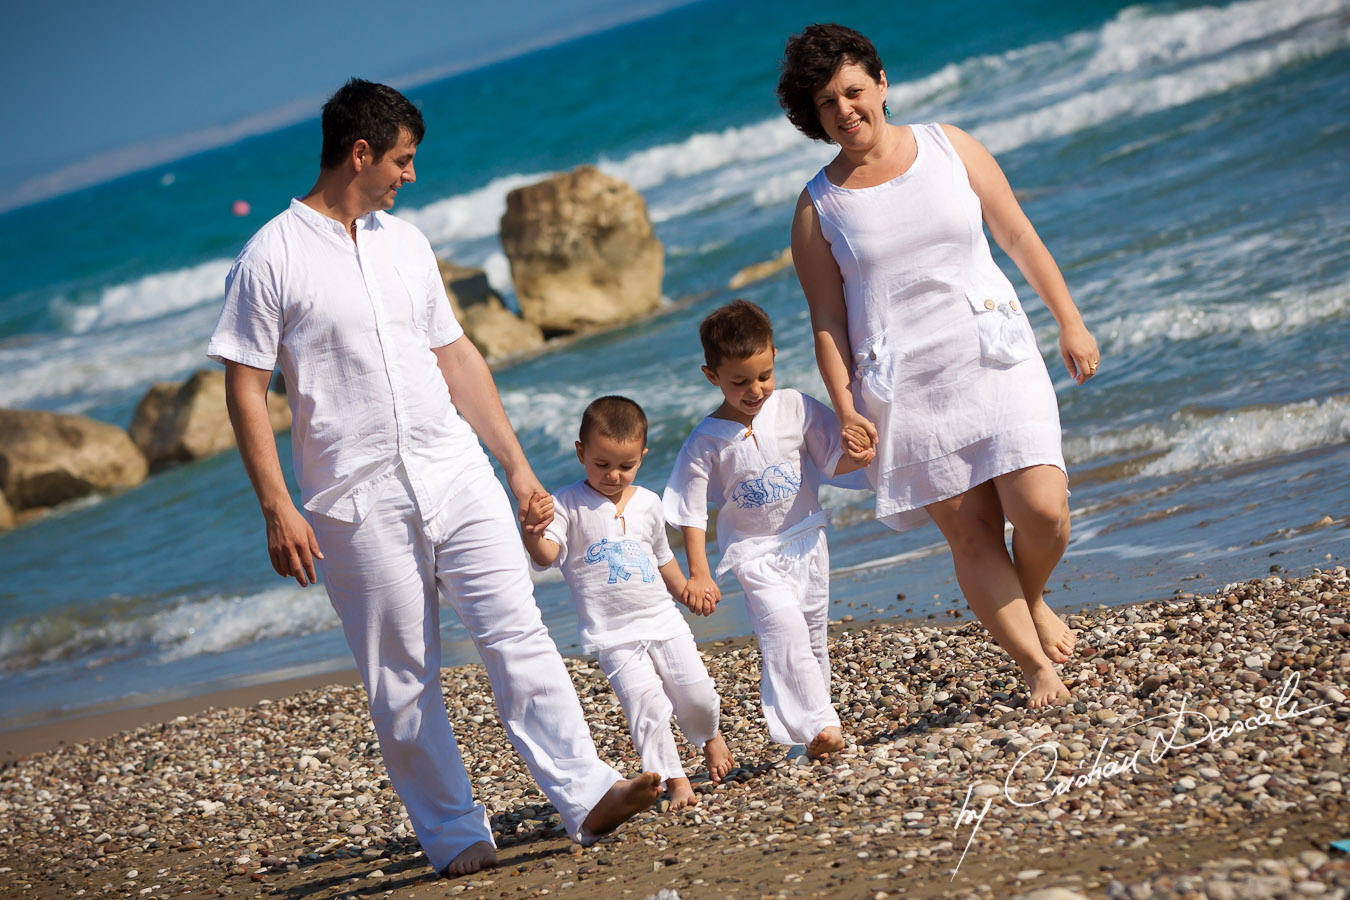 Kurium Beach - Family Photo Session. Cyprus Photographer: Cristian Dascalu